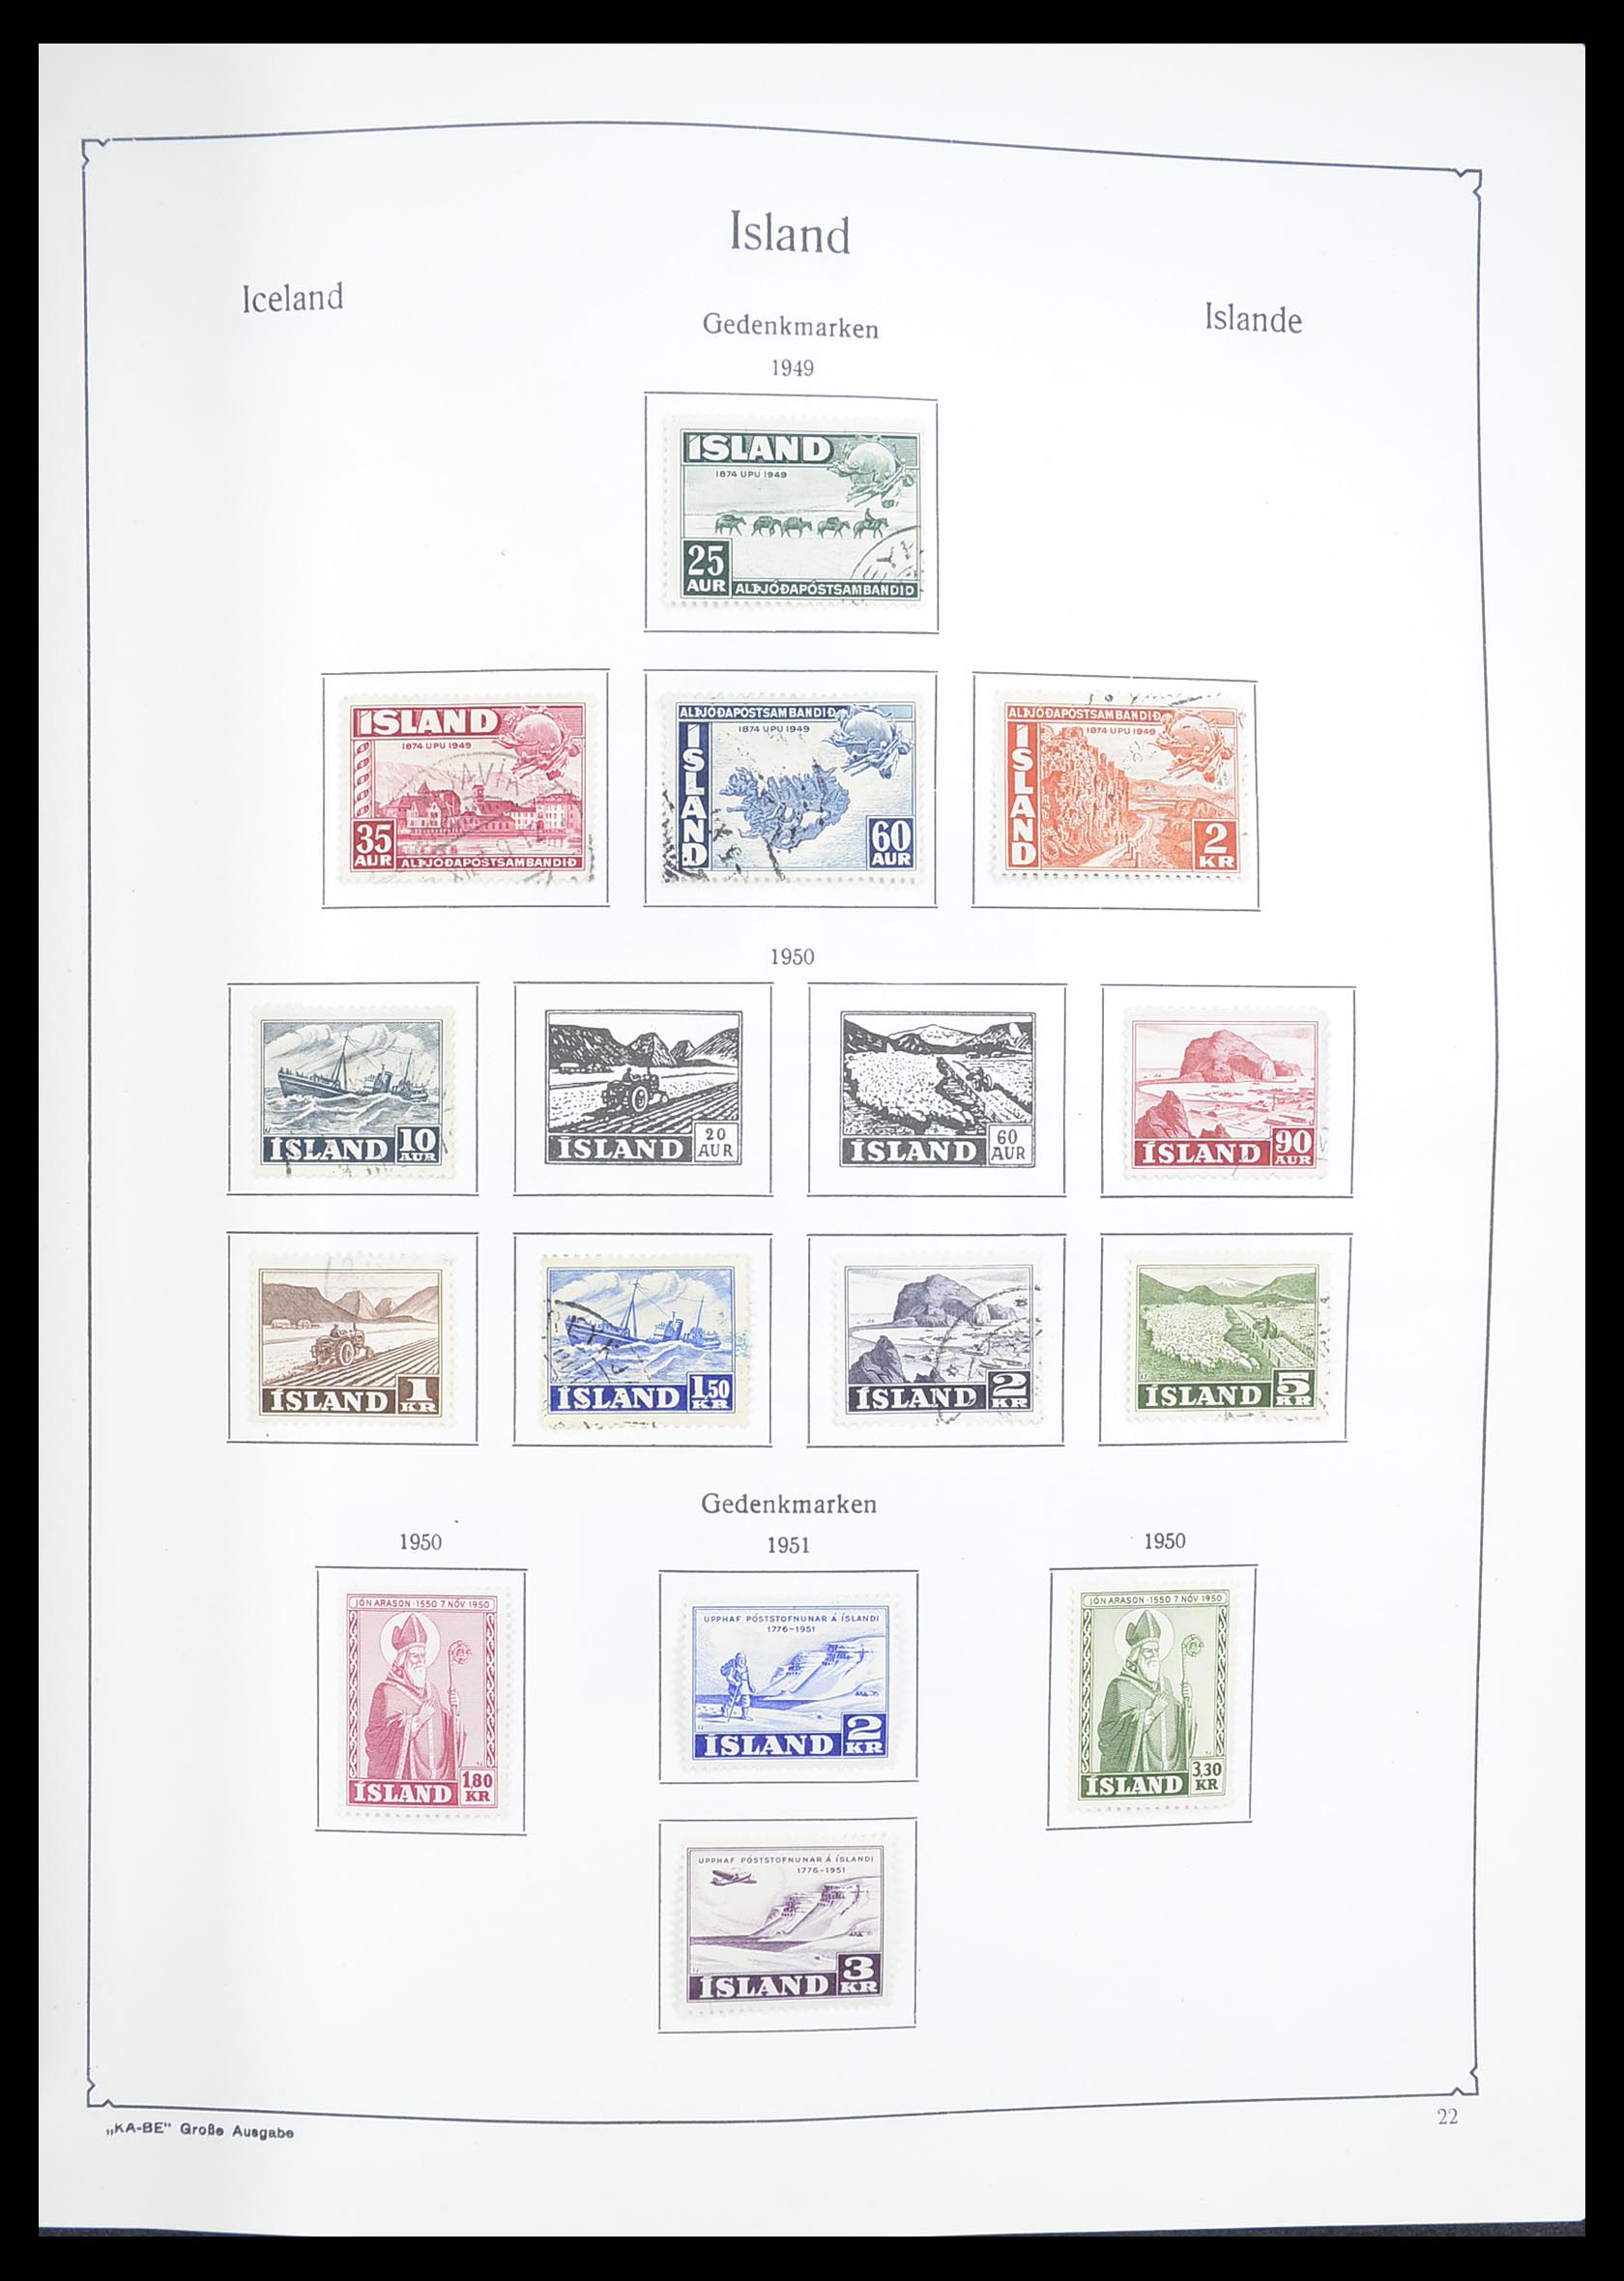 33379 078 - Stamp collection 33379 Scandinavia 1856-1972.